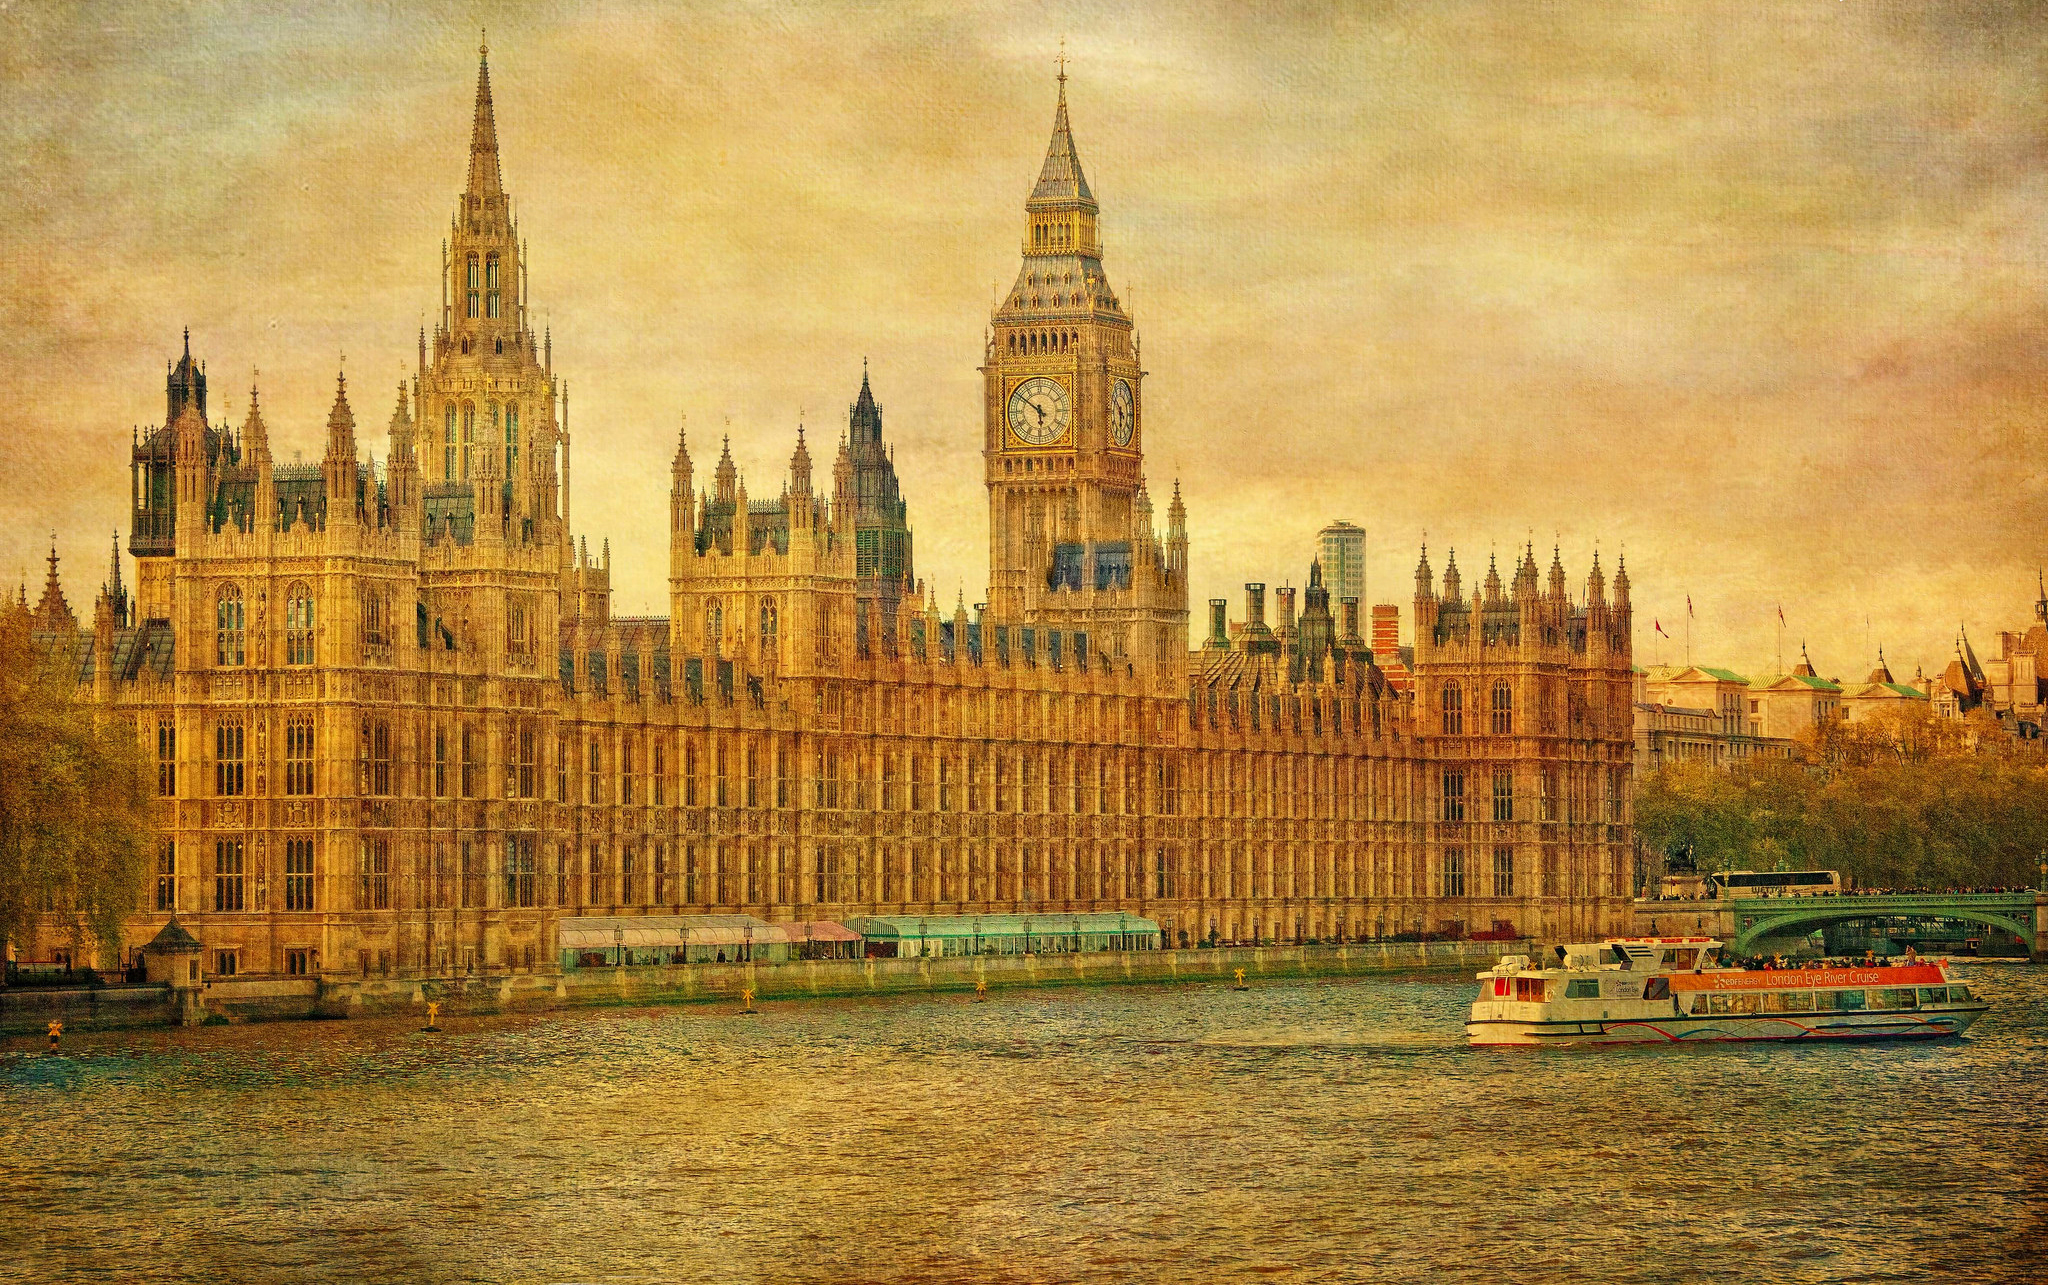 Англия начала 17 века. Здание парламента в Лондоне 19 век. Вестминстерский дворец Лондон в 18 веке. Здание парламента в Лондоне 20 век. Лондон 19 века парламент.